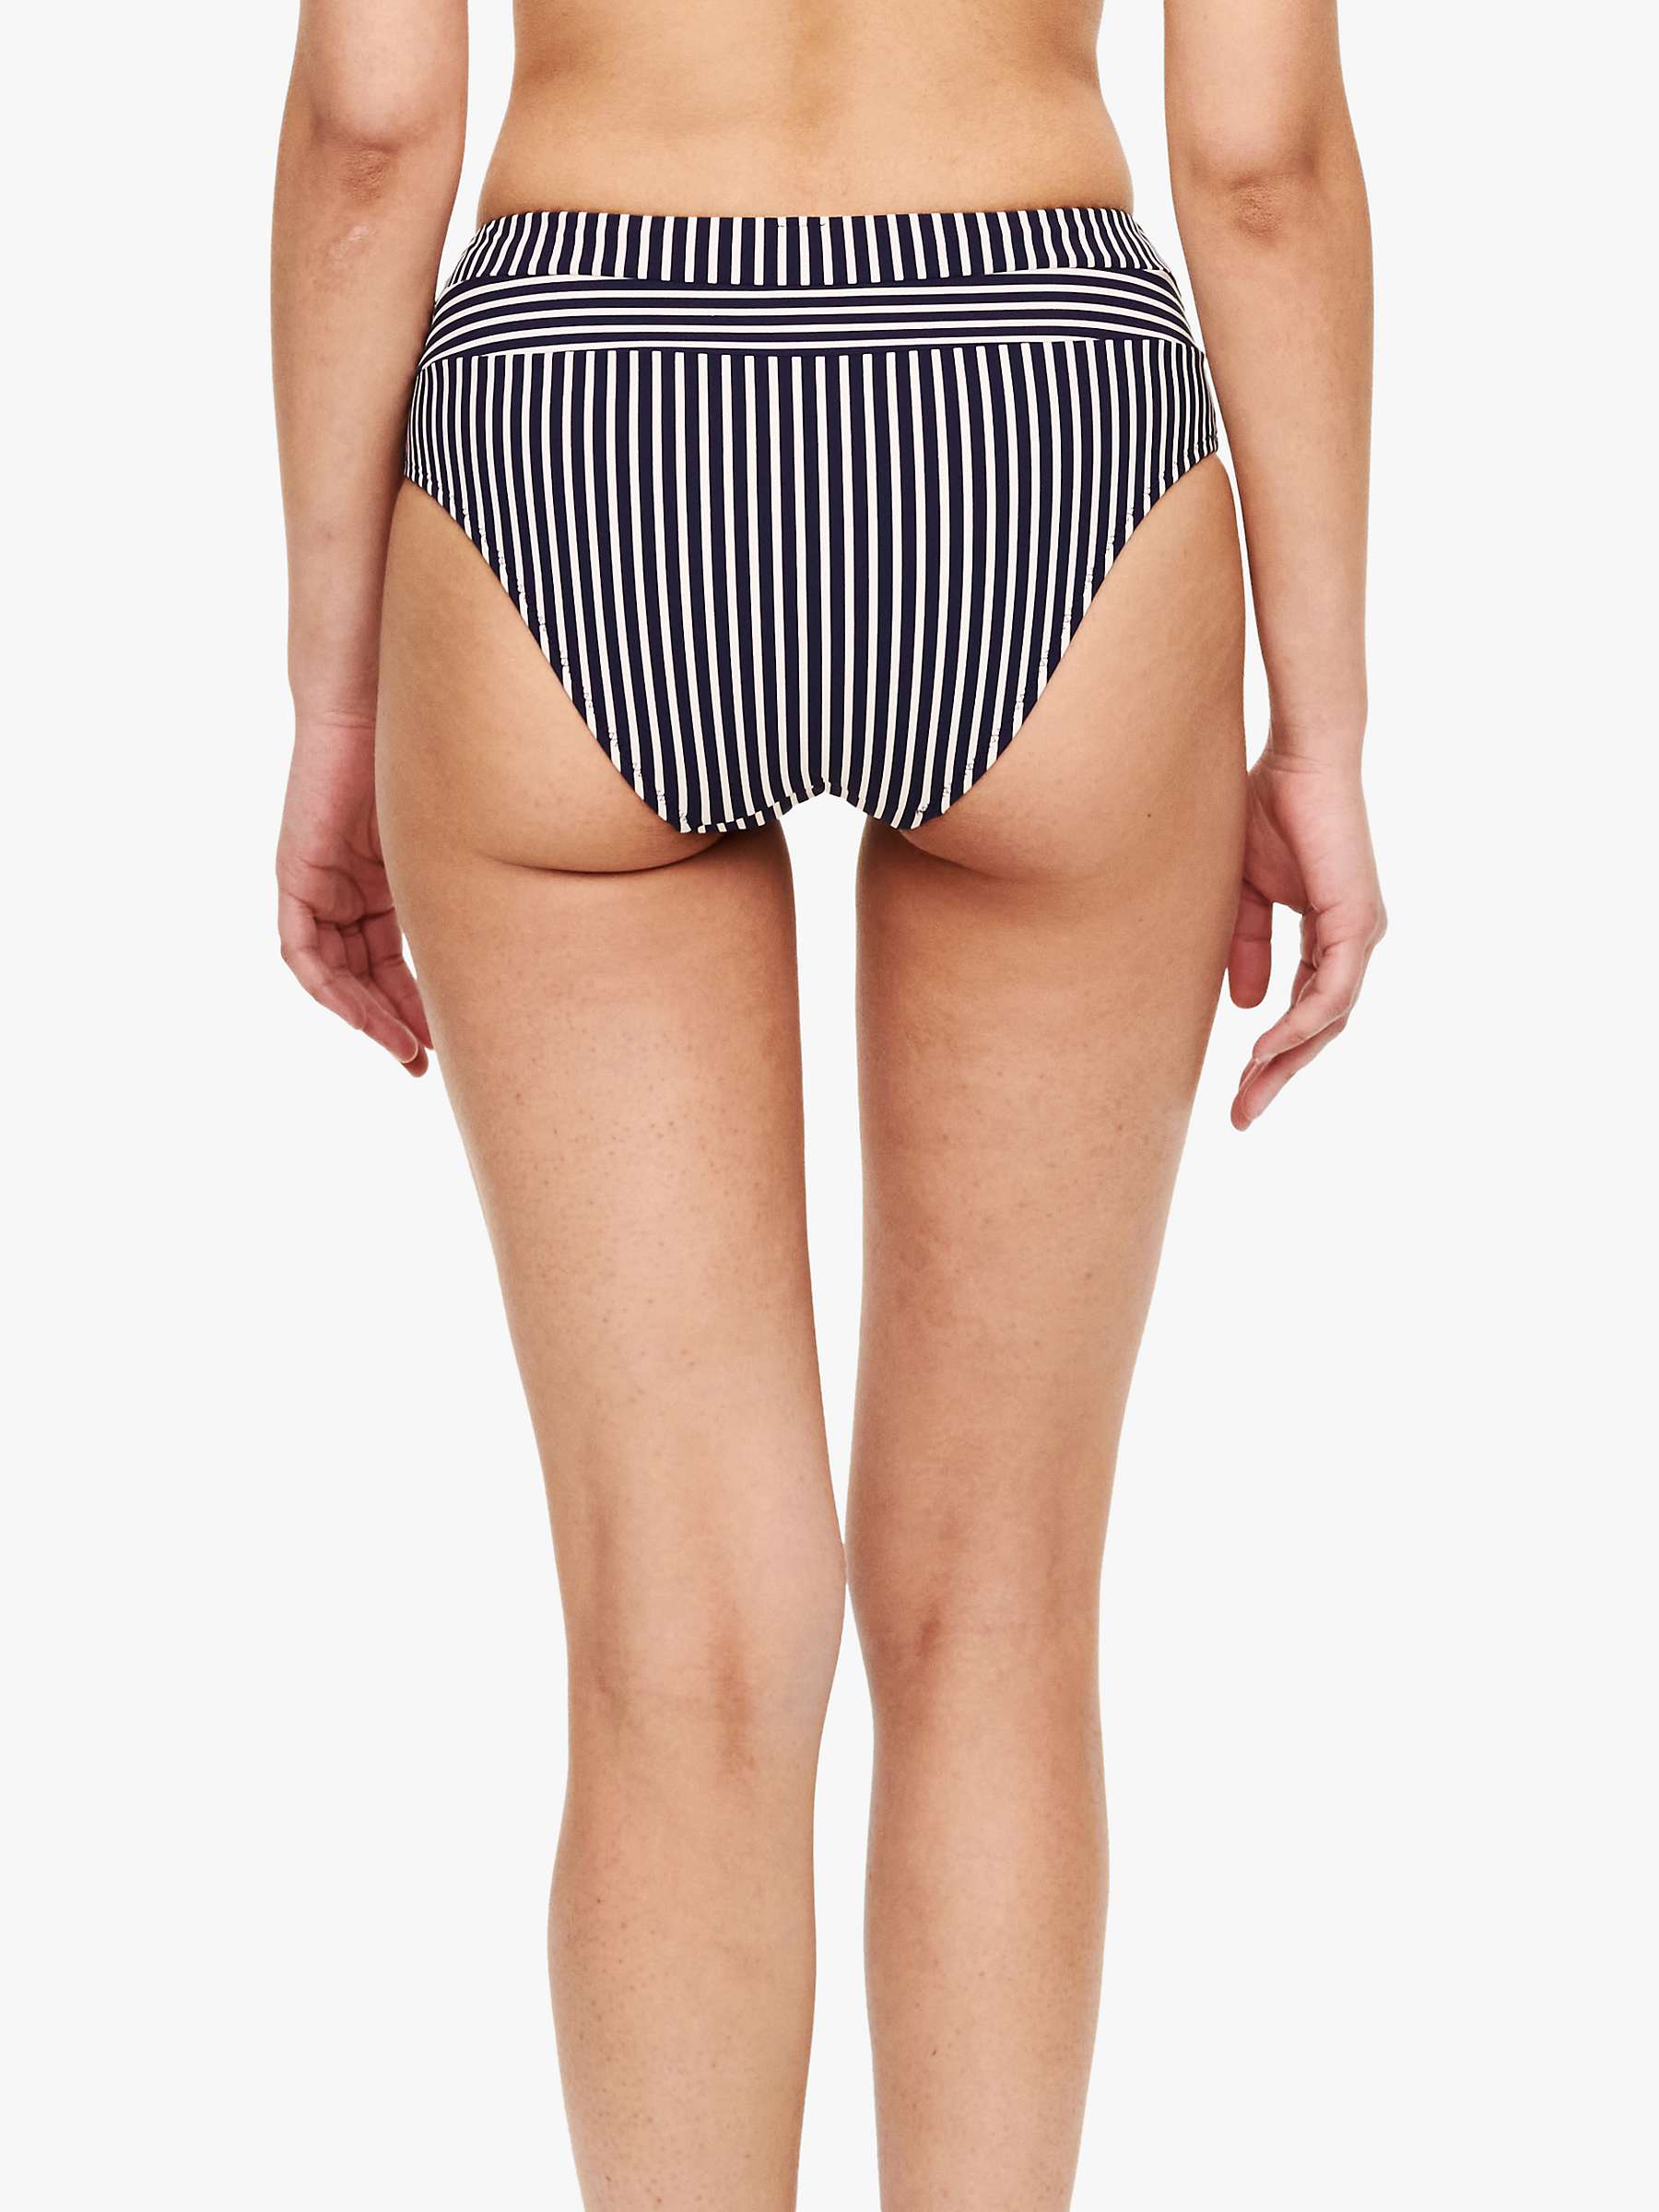 Buy Femilet Murano Bikini Bottoms, Dark Stripes Online at johnlewis.com